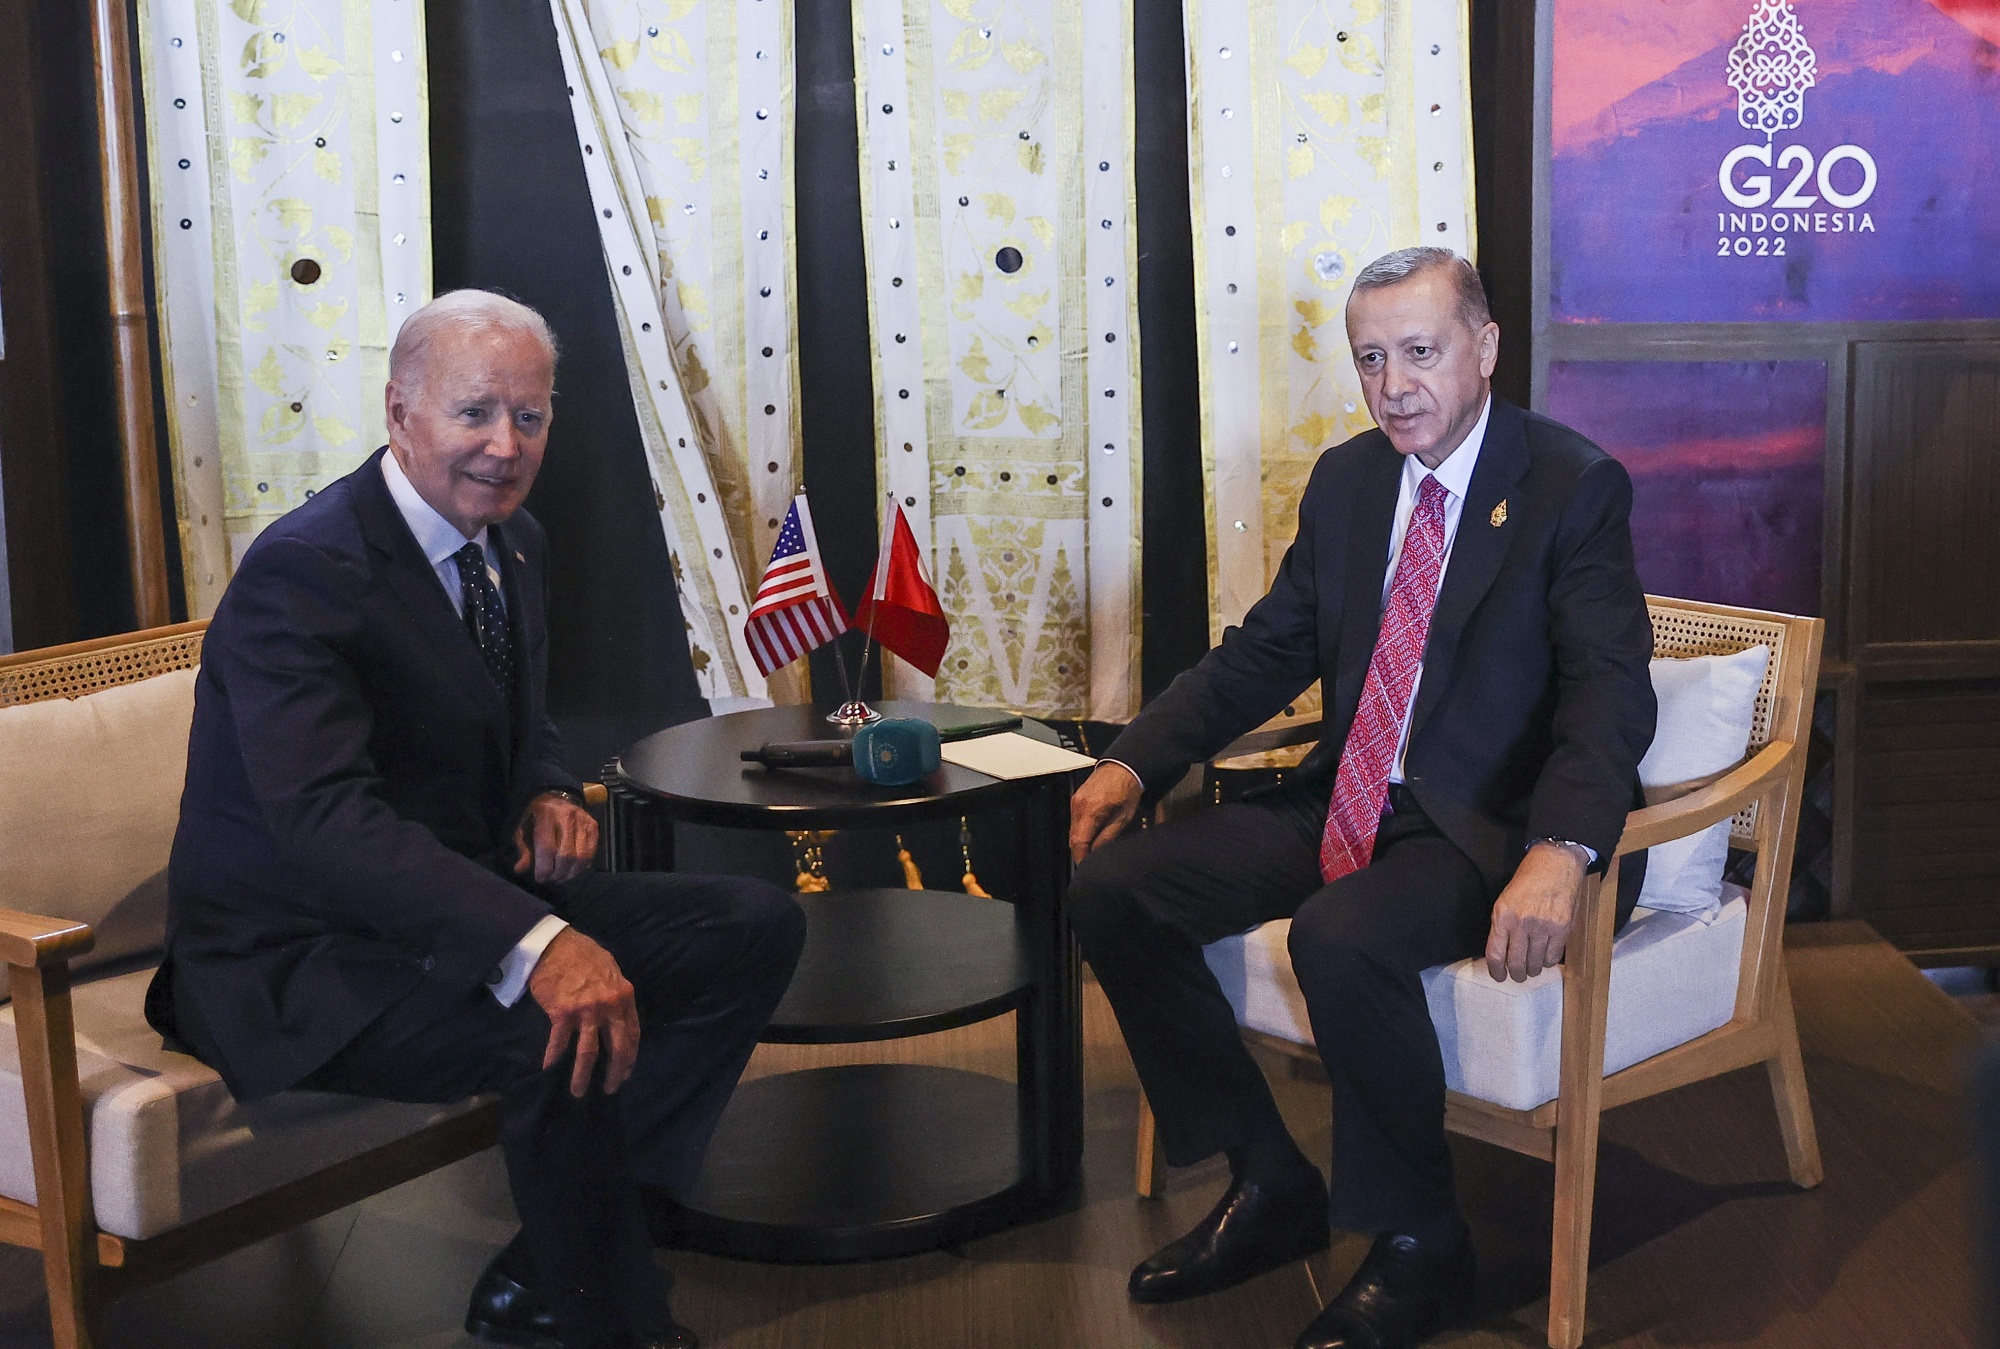 President Joe Biden and Recep Tayyip Erdogan meet during the G20 summit on Nov. 15.